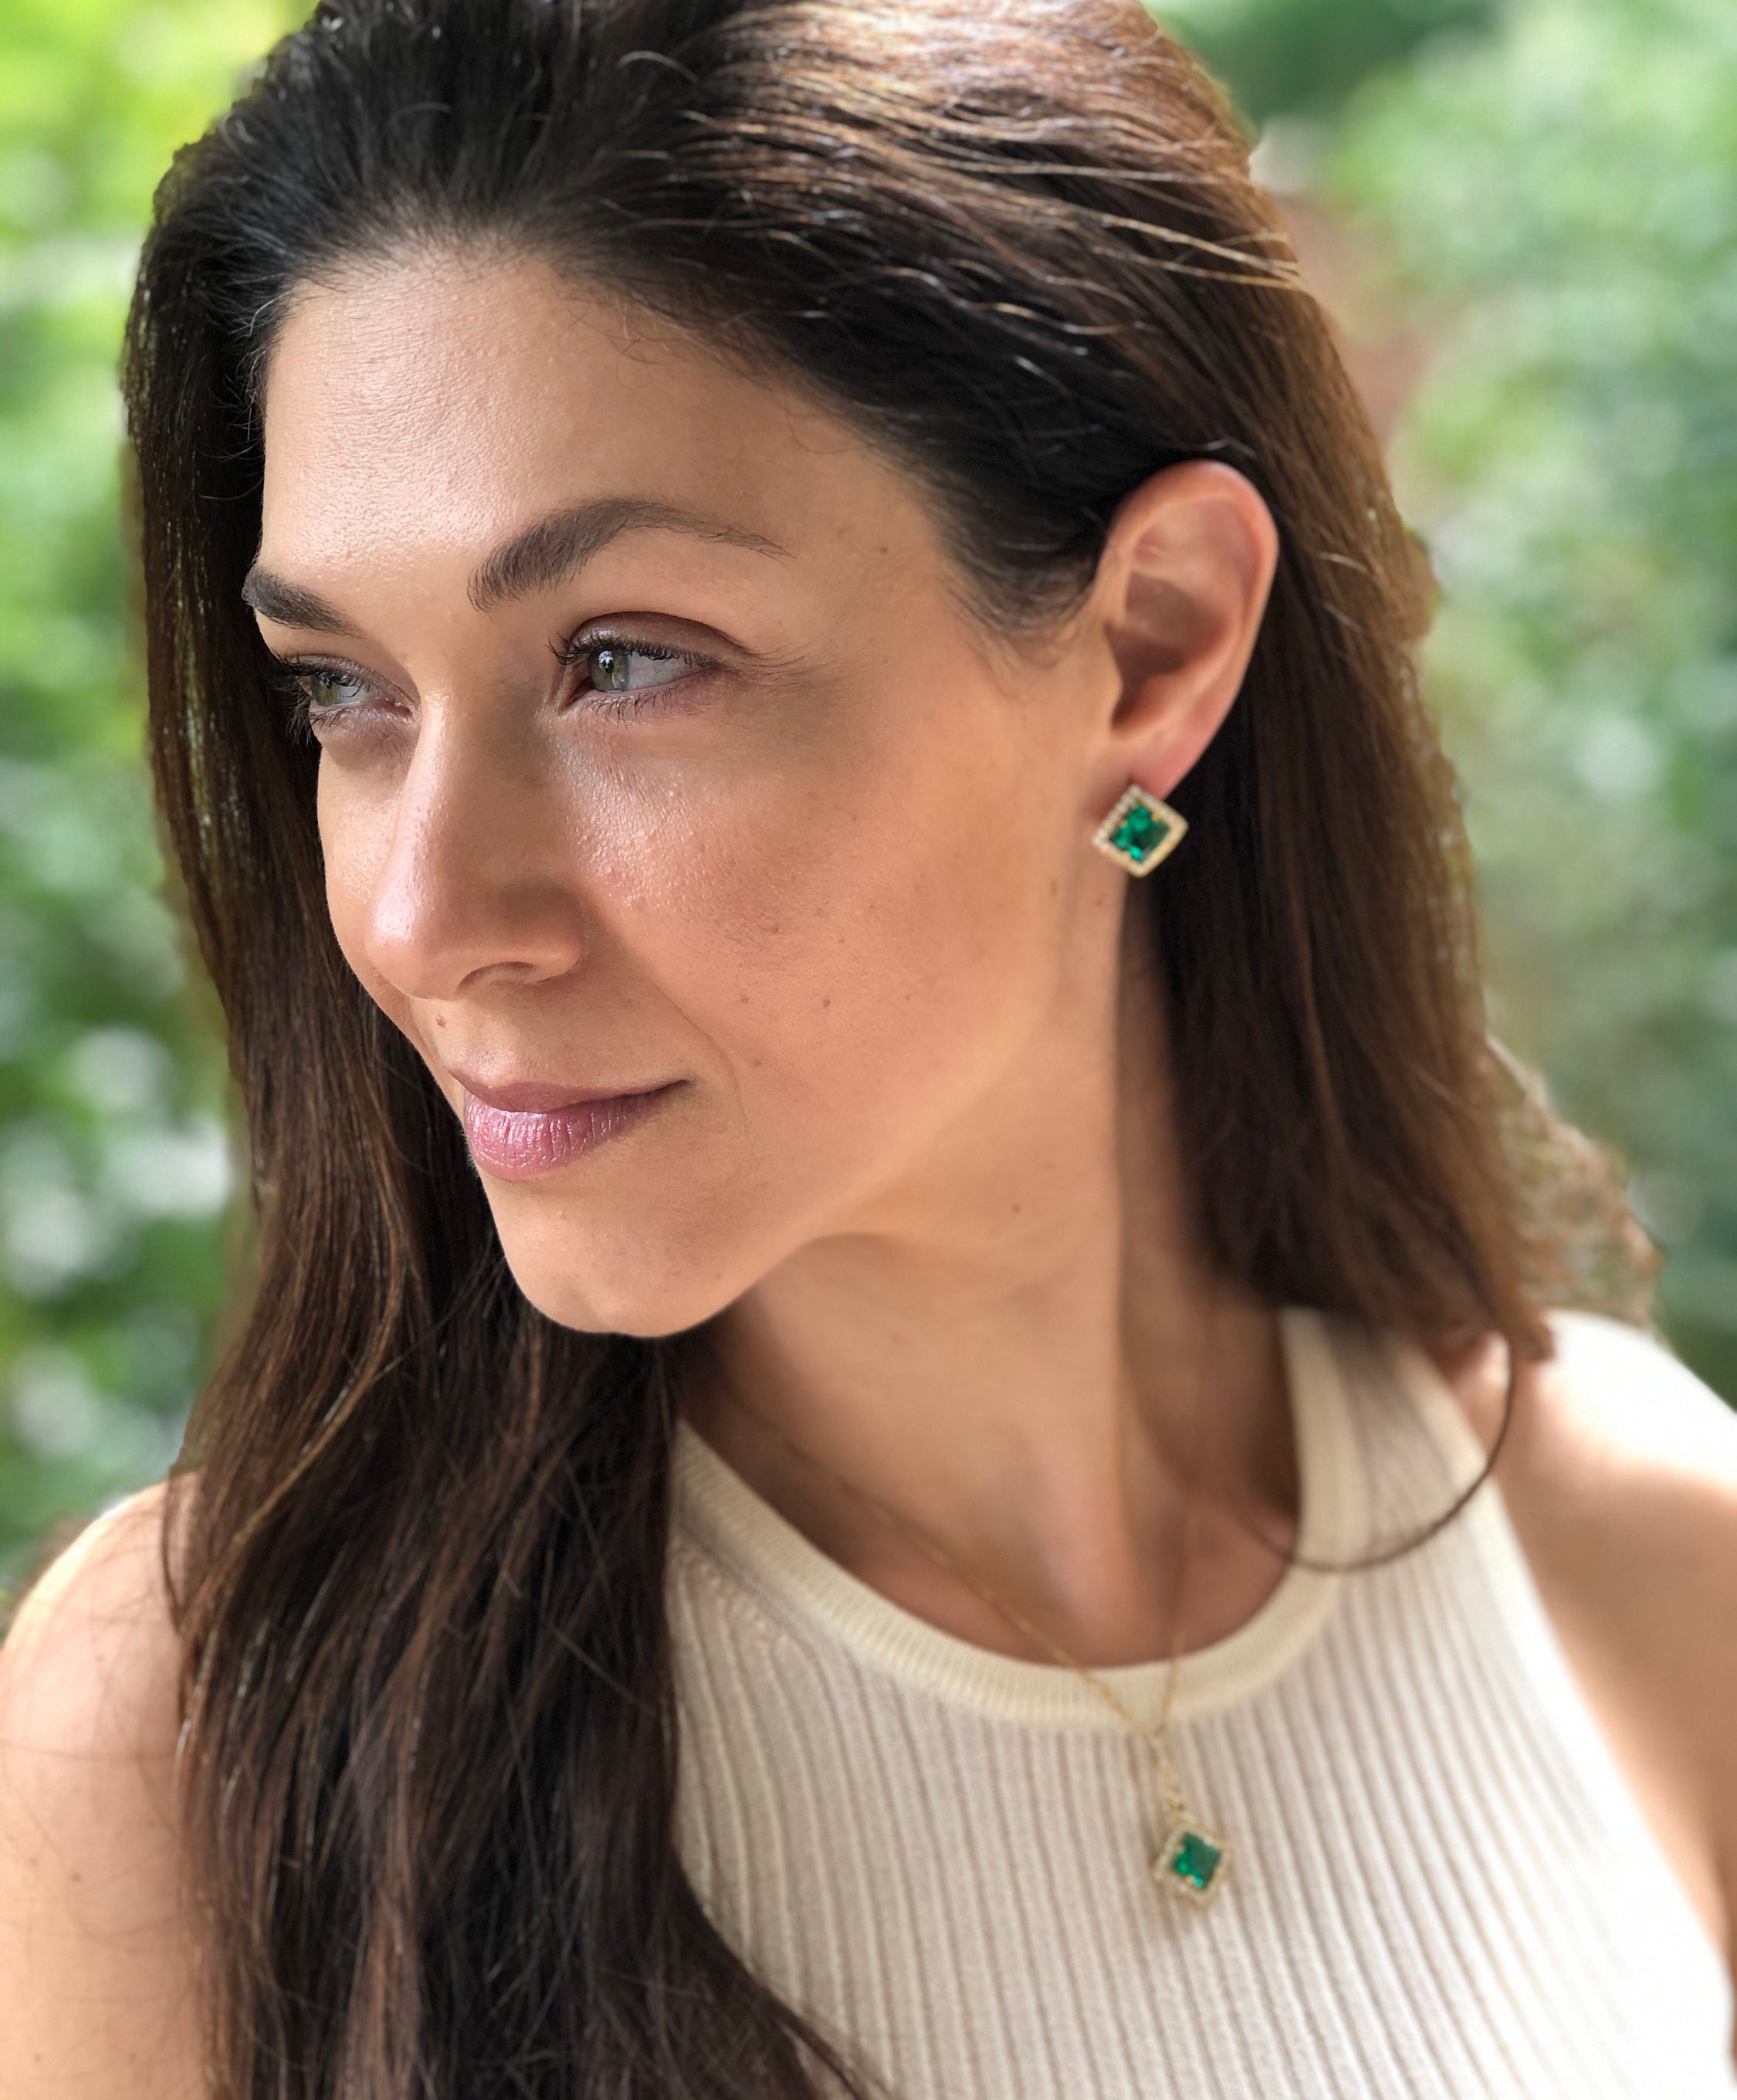 Emerald Earrings, Created Emerald, Antique Earrings, Green Earrings, V